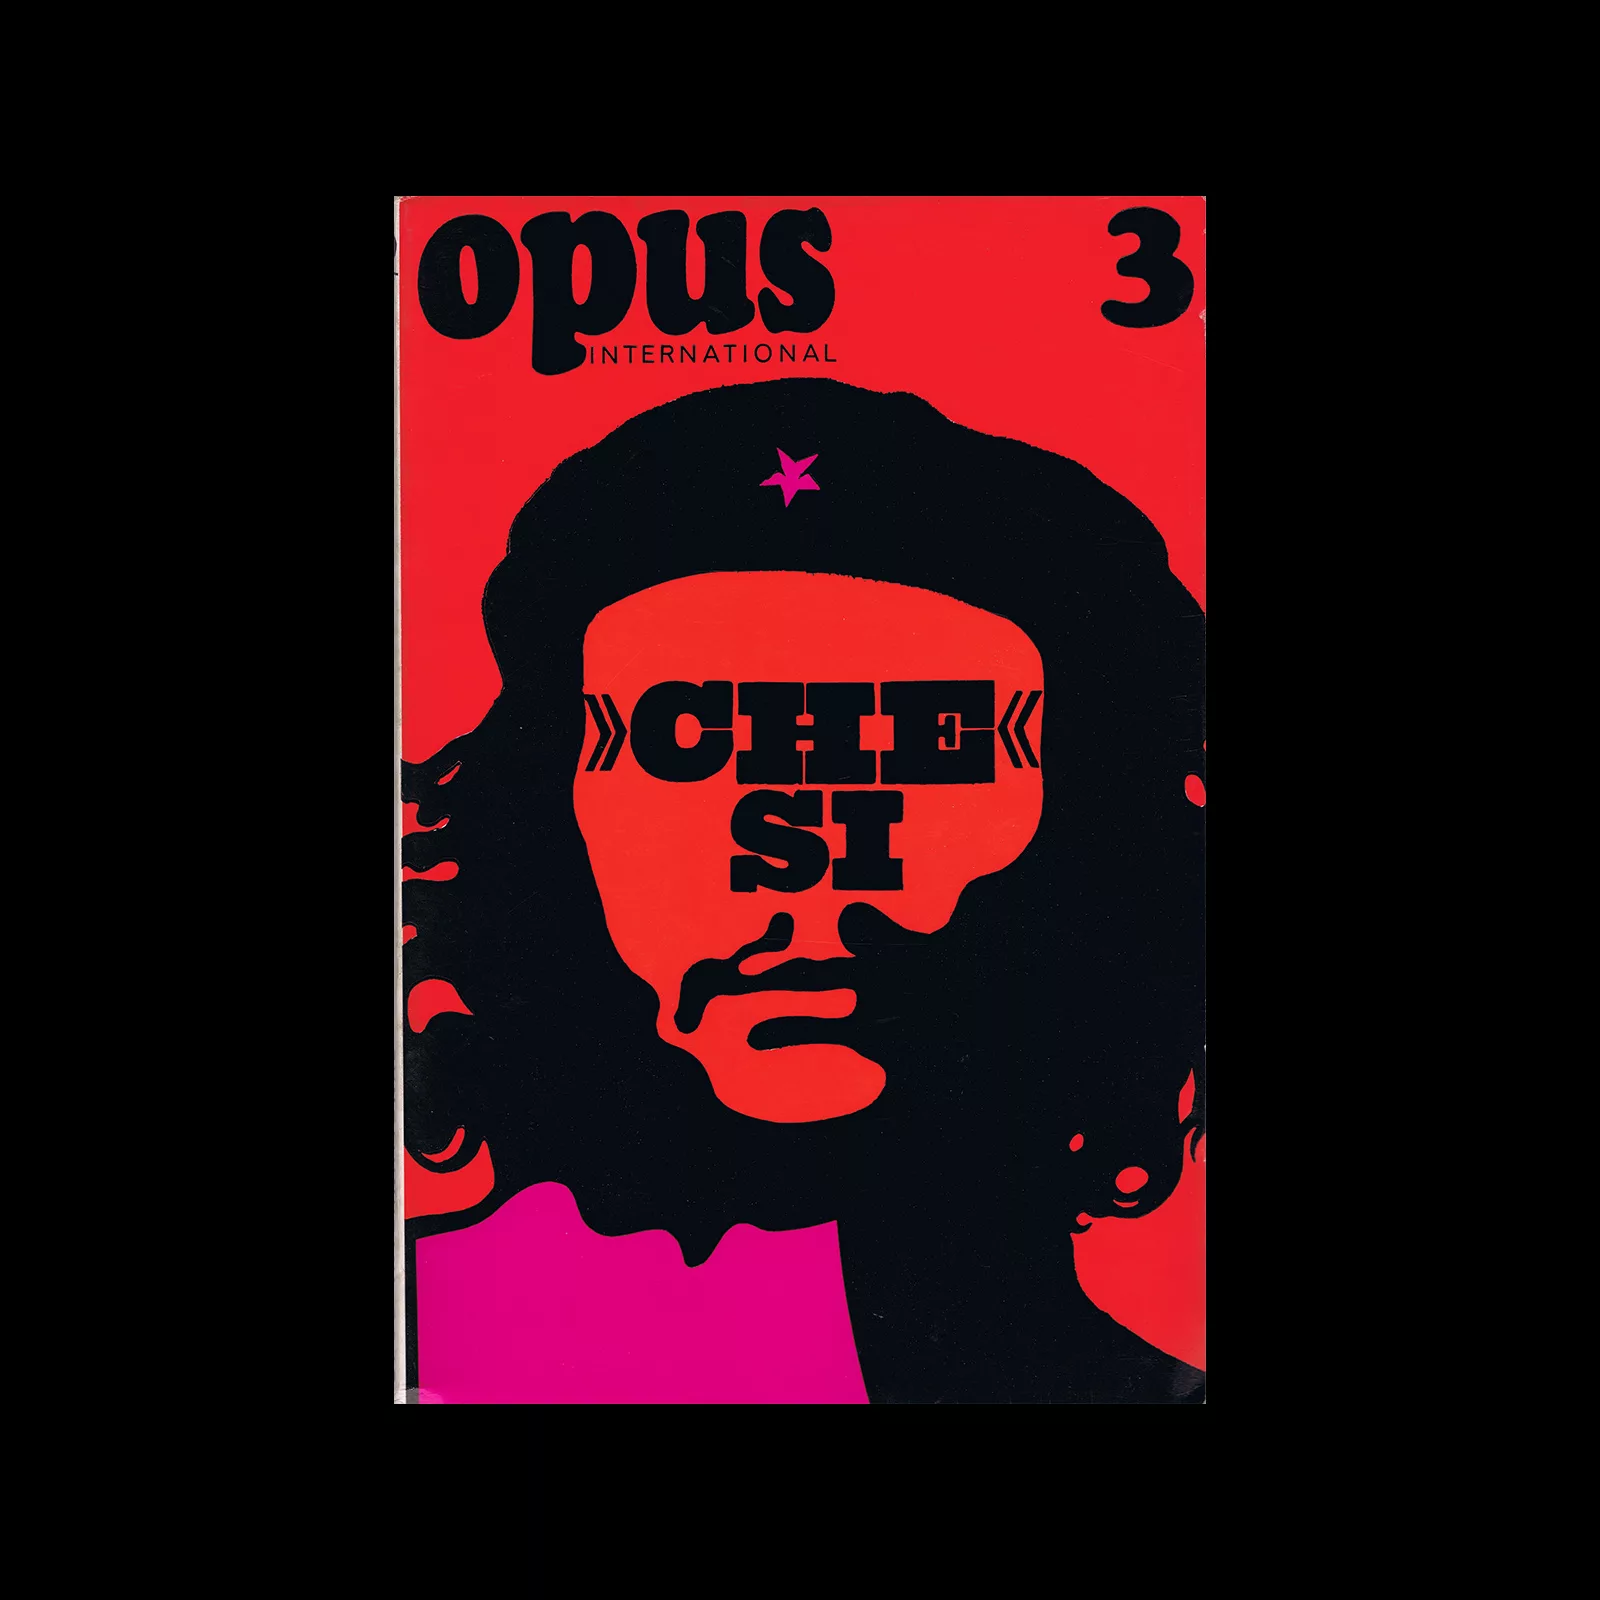 Opus International, 3, 1967. Cover design by Roman Cieślewicz